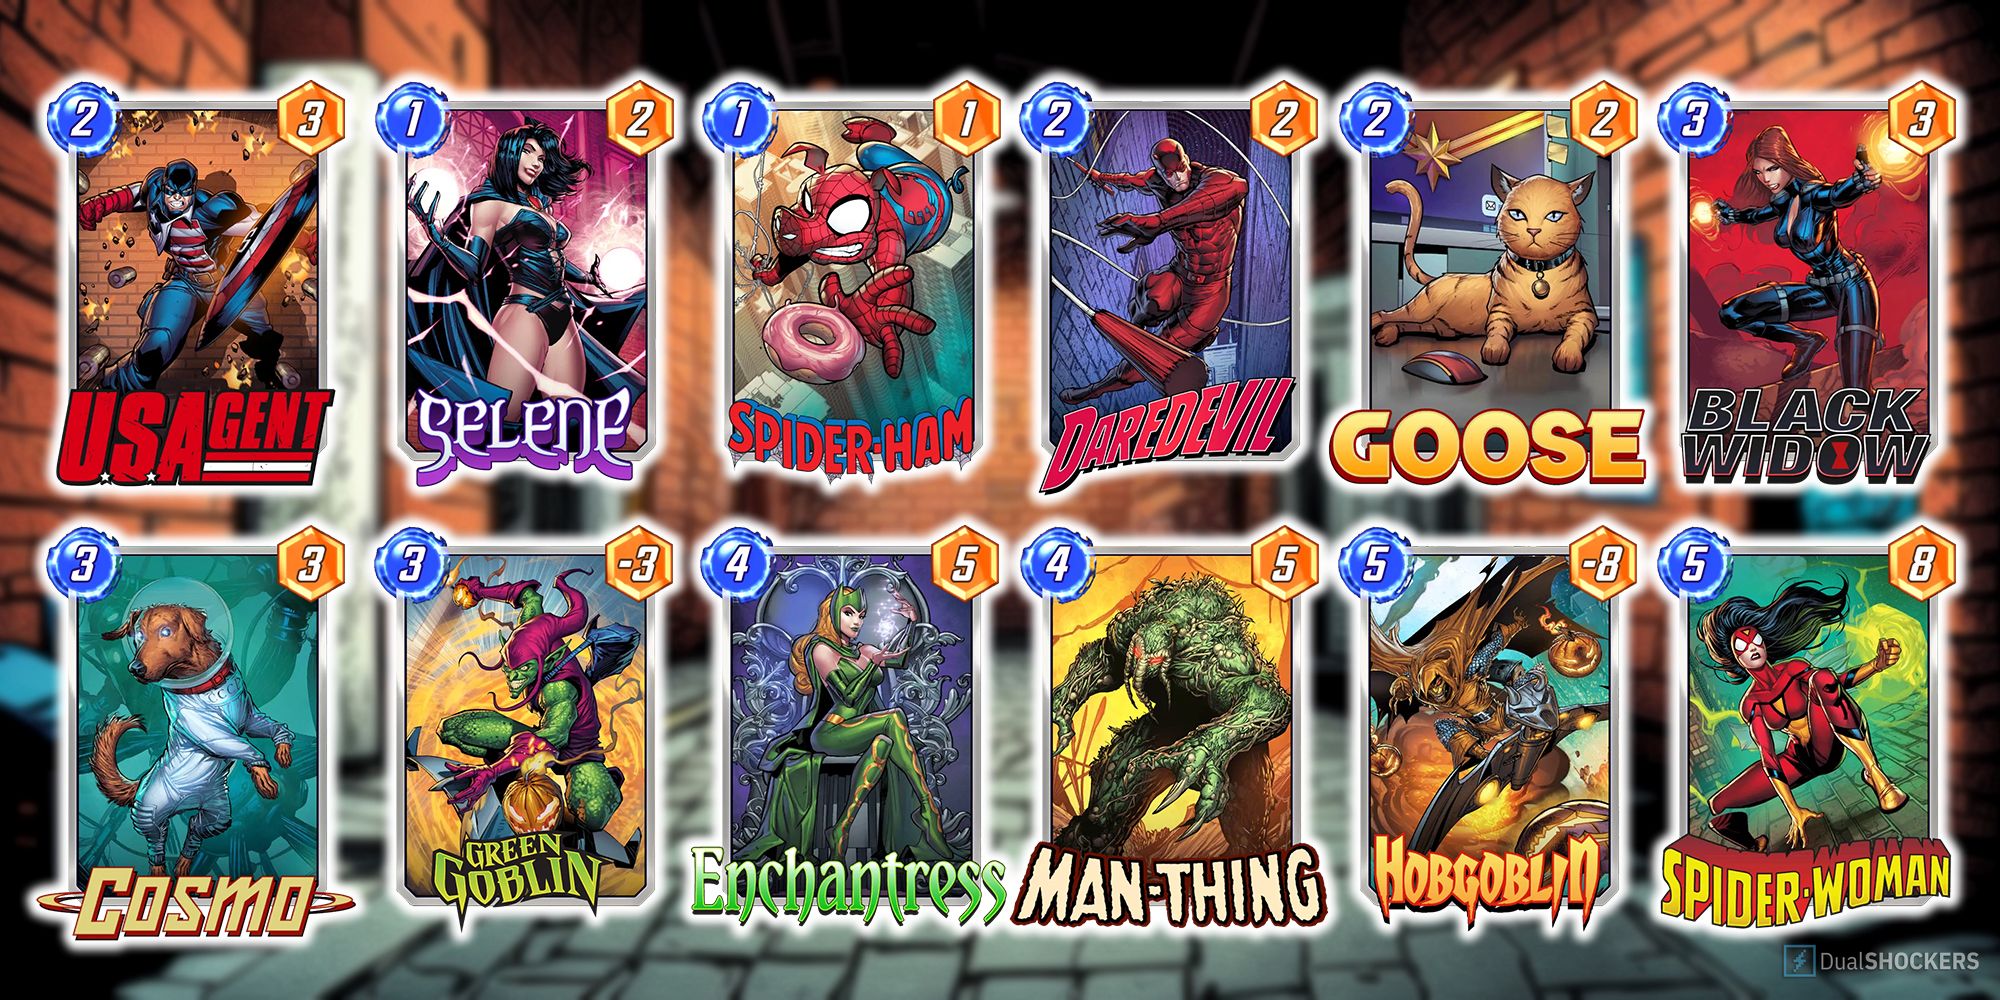 Marvel Snap deck comprised of U.S. Agent, Selene, Spider-Ham, Daredevil, Goose, Black Widow, Cosmo, Green Goblin, Enchantress, Man-Thing, Hobgoblin, and Spider-Woman.